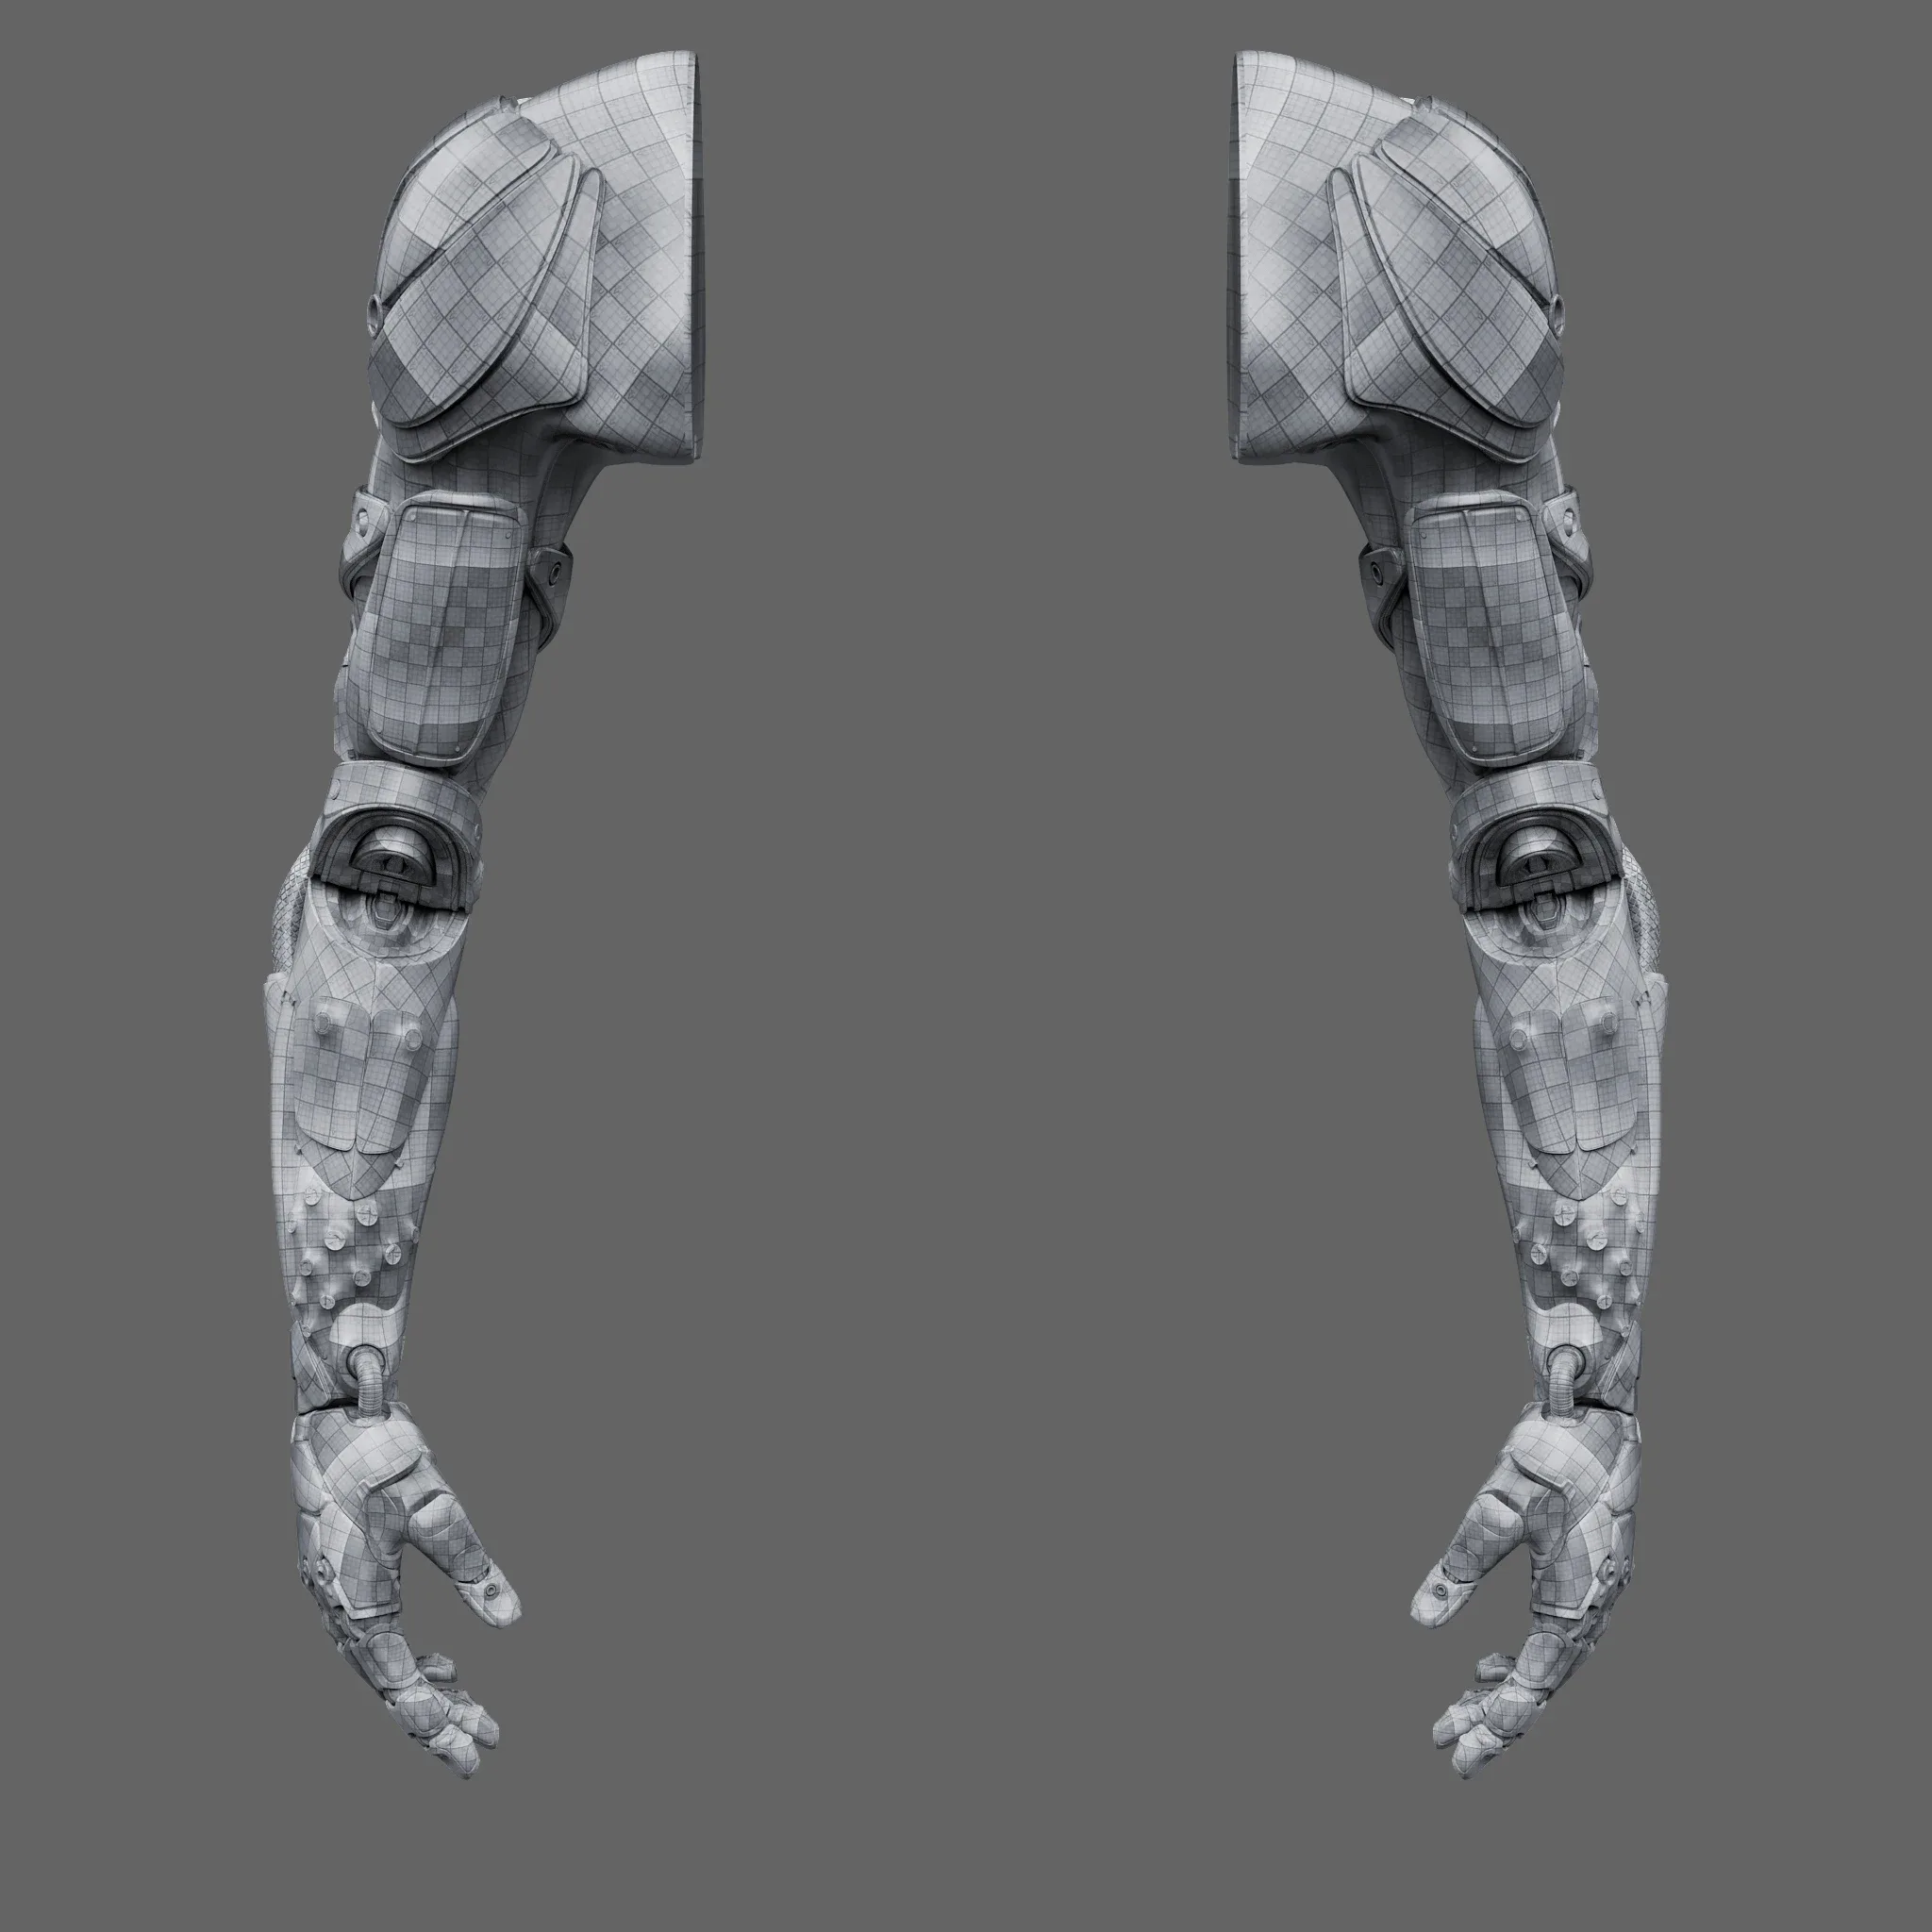 Realistic Cyberpunk Arm Augment